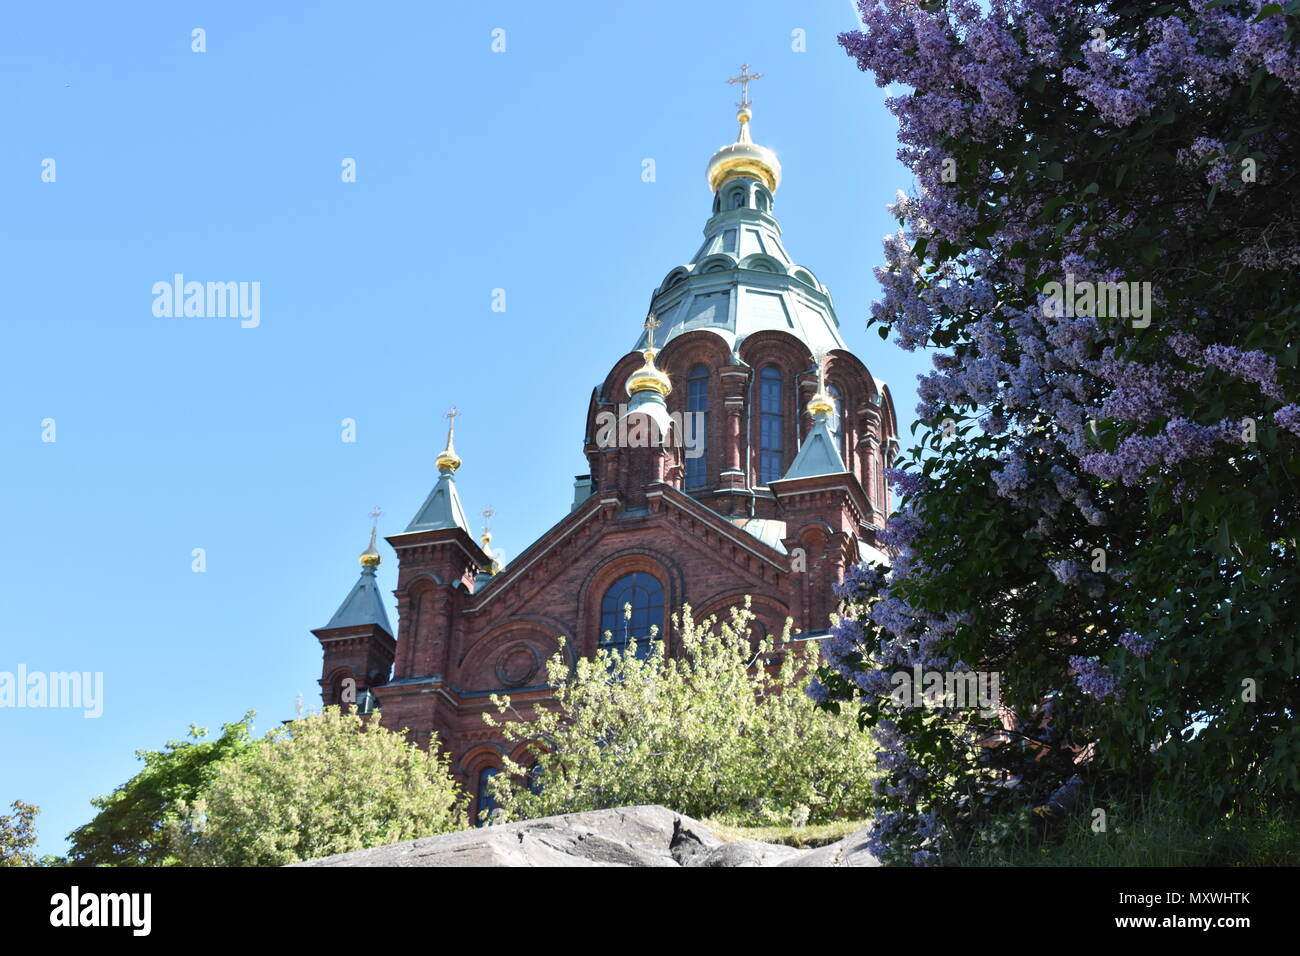 Adorable Ansicht der Uspenski Kathedrale - Helsinki Byzantine-Russian architektonisches Erbe. Helsinki, Finnland, 28. Mai 2018 Stockfoto